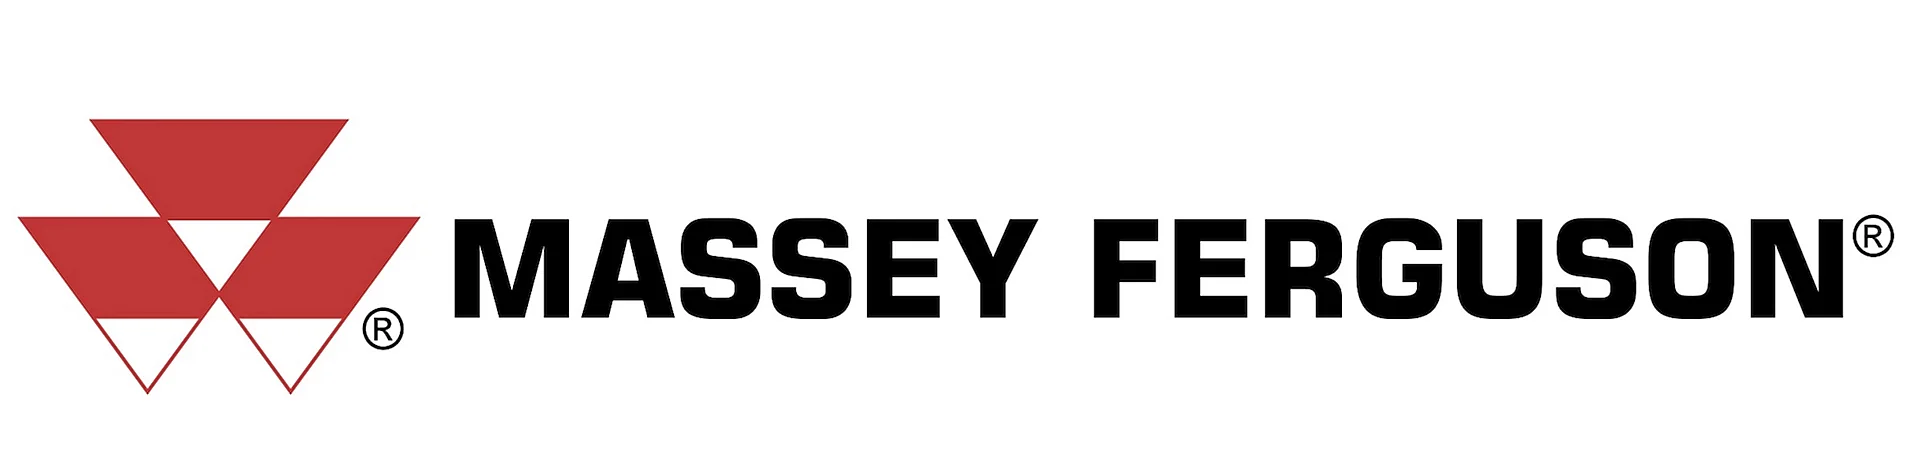 Massey Ferguson Logo Wallpaper